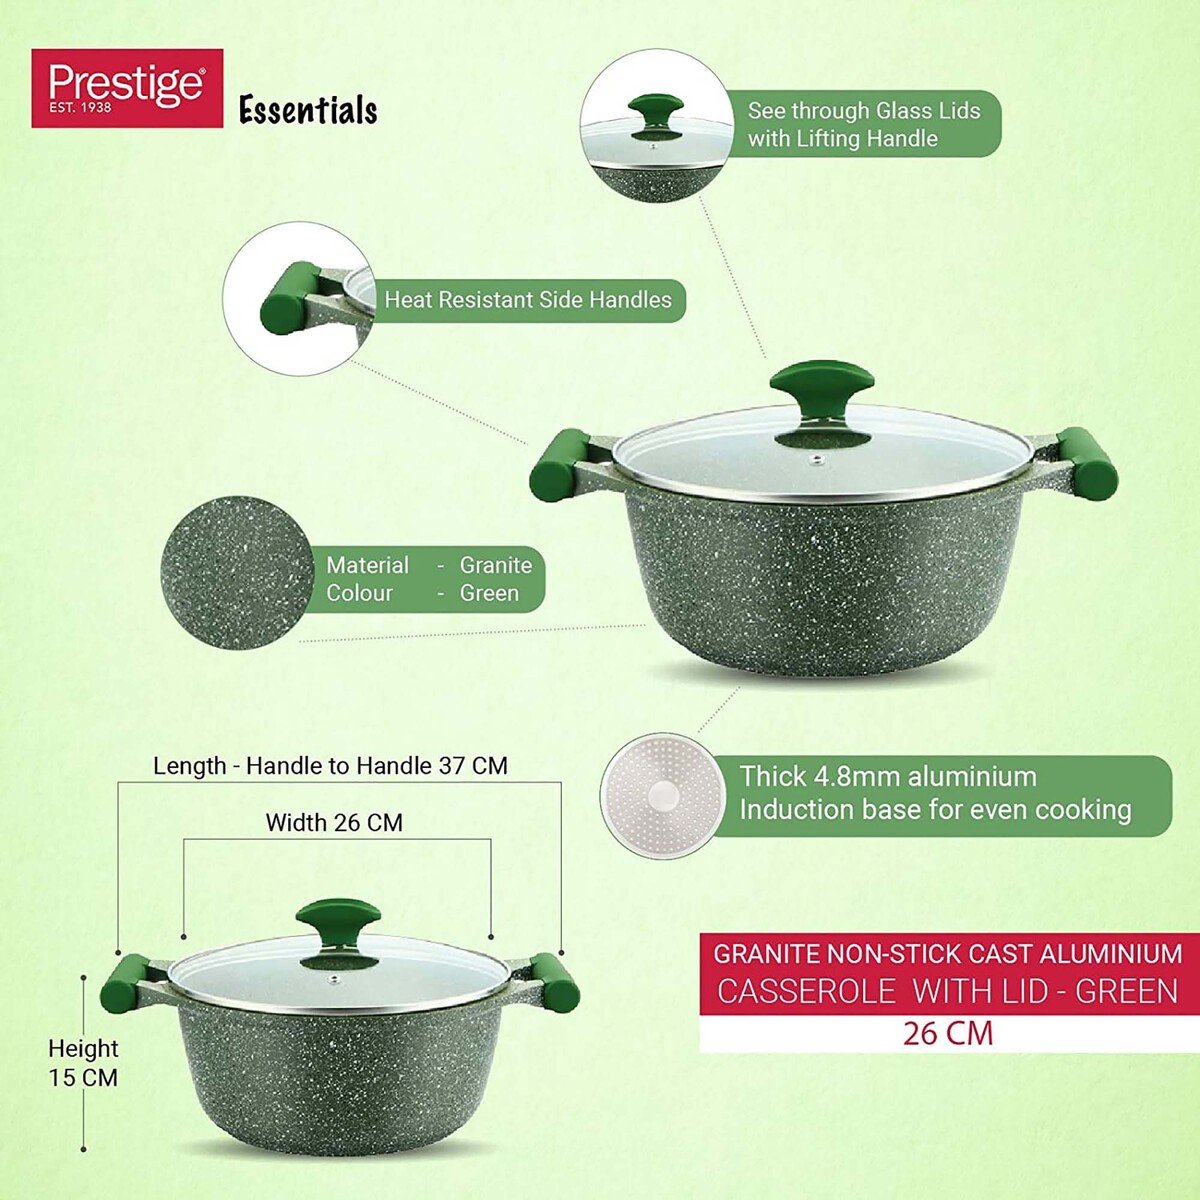 Prestige Essentials Granite Non-Stick Cast Aluminium Casserole with Lid, 26 cm, Green, PR81110